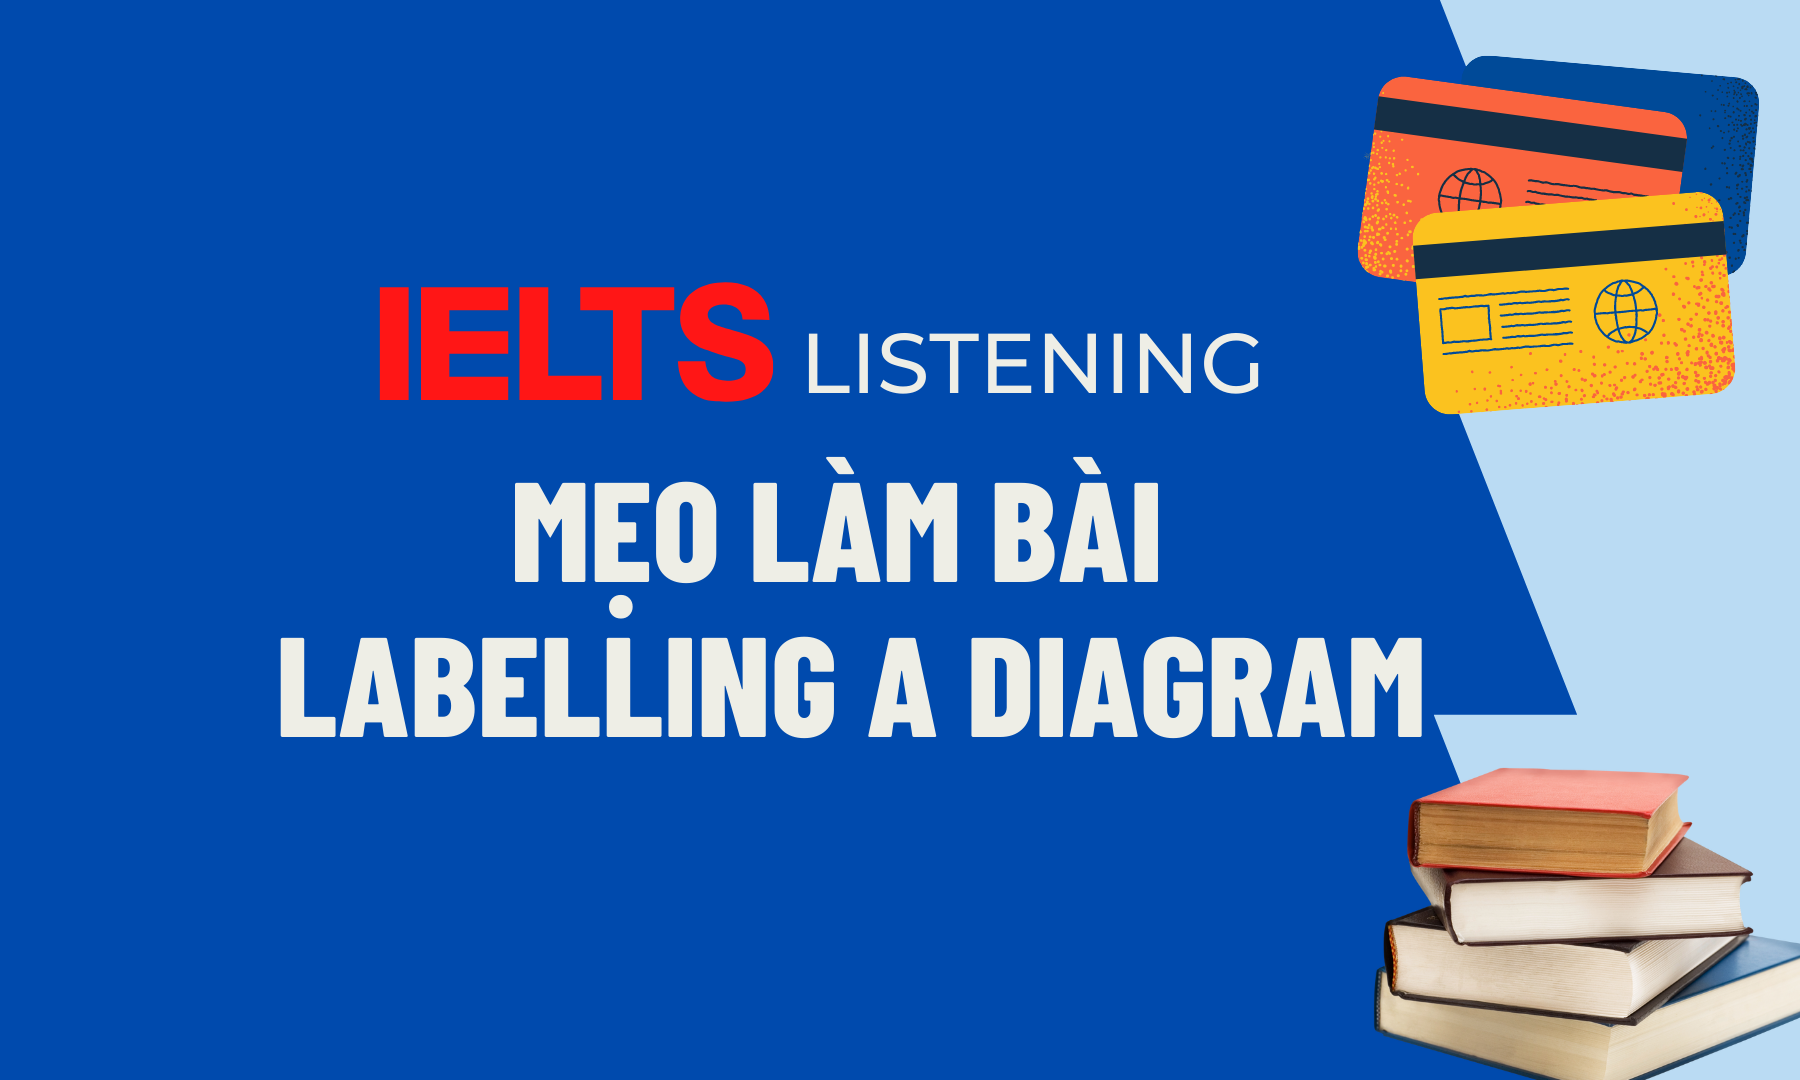 IELTS LISTENING – MẸO LÀM BÀI LABELLING A DIAGRAM